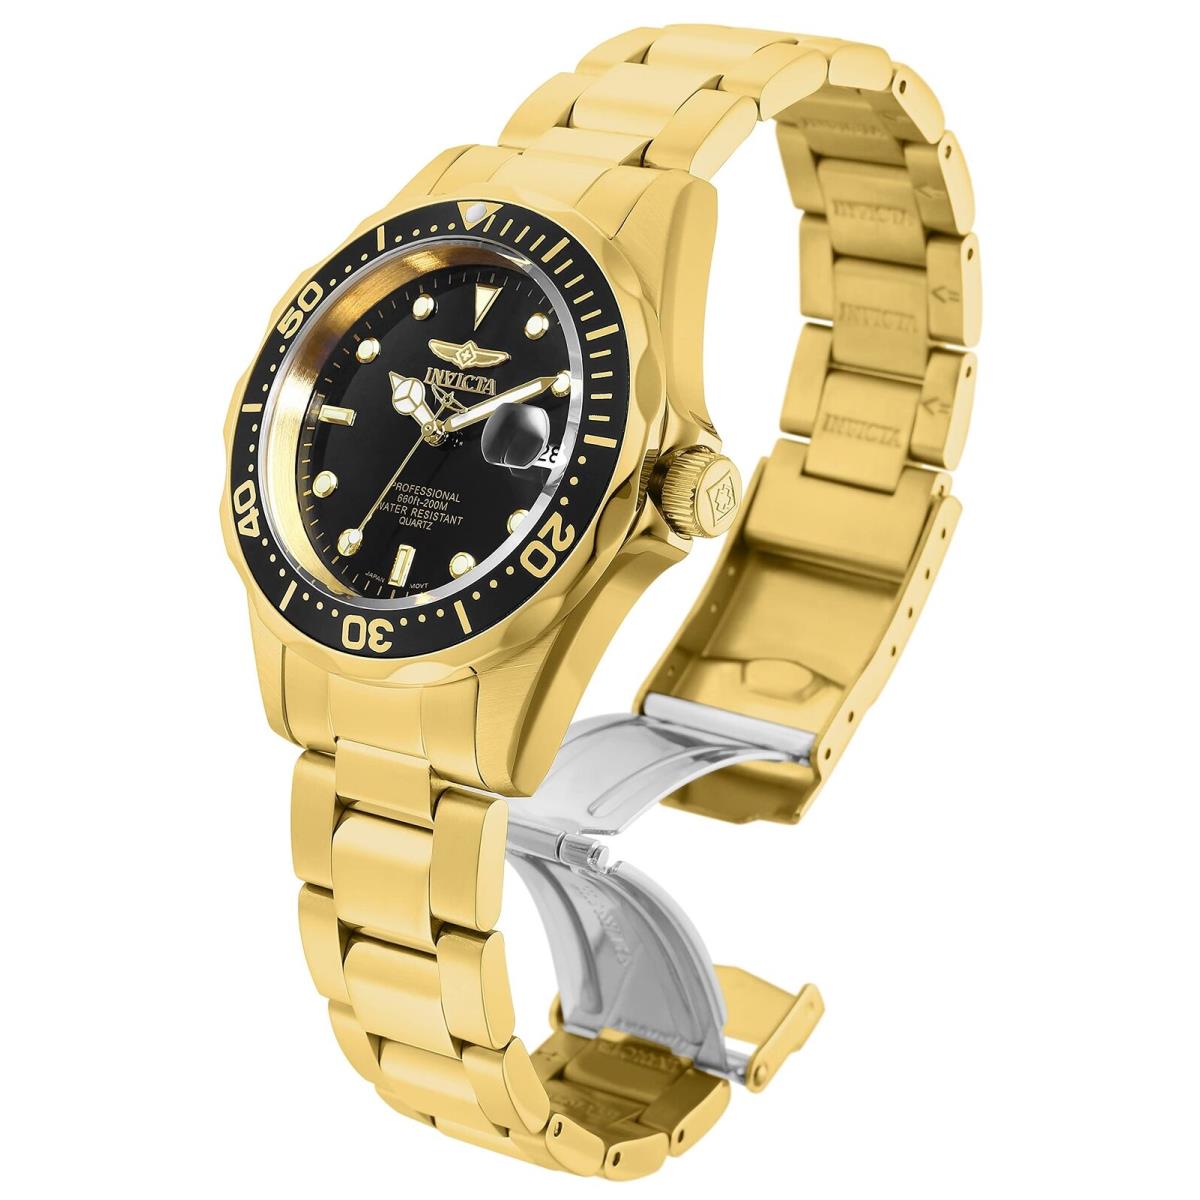 Invicta Men s Stainless Steel Pro Diver Quartz Watch 37.5mm Gold Plated Watch - Gold Plated Watch, Dial: Black, Band: Gold